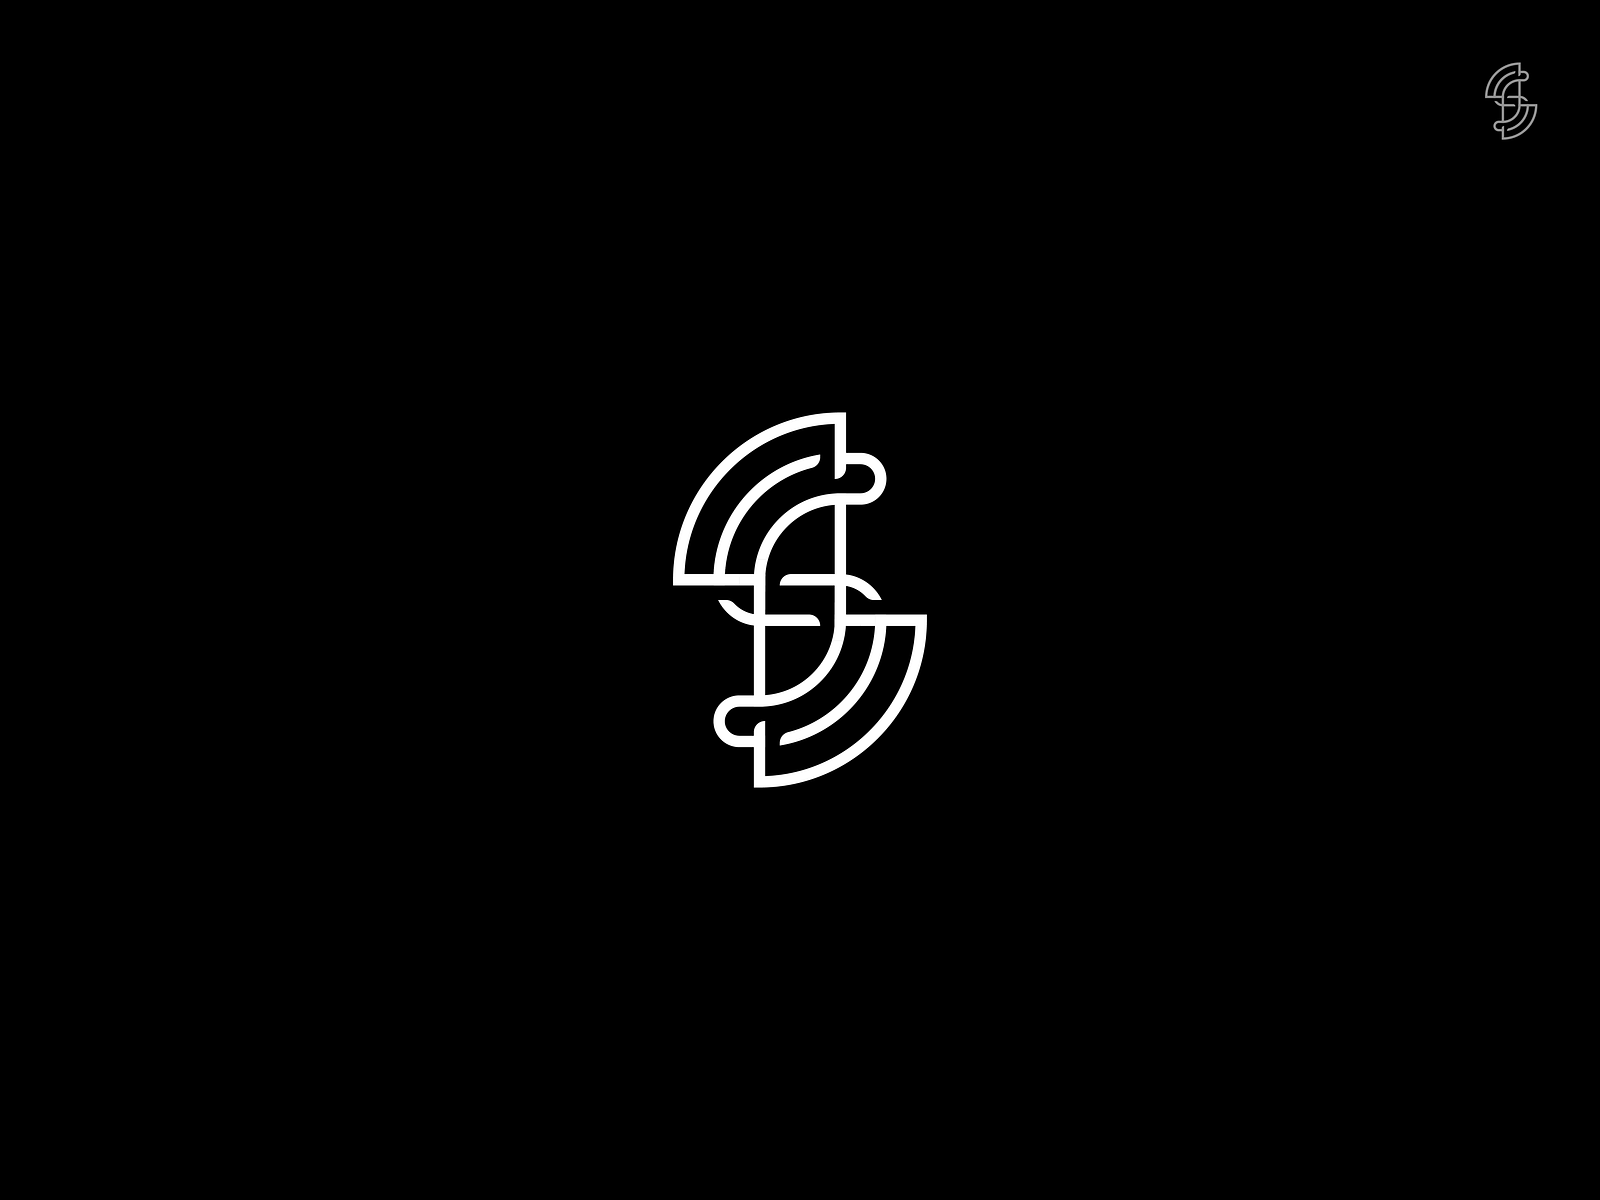 S + Wi-Fi _ Logo design by Vijay -Logo Designer on Dribbble